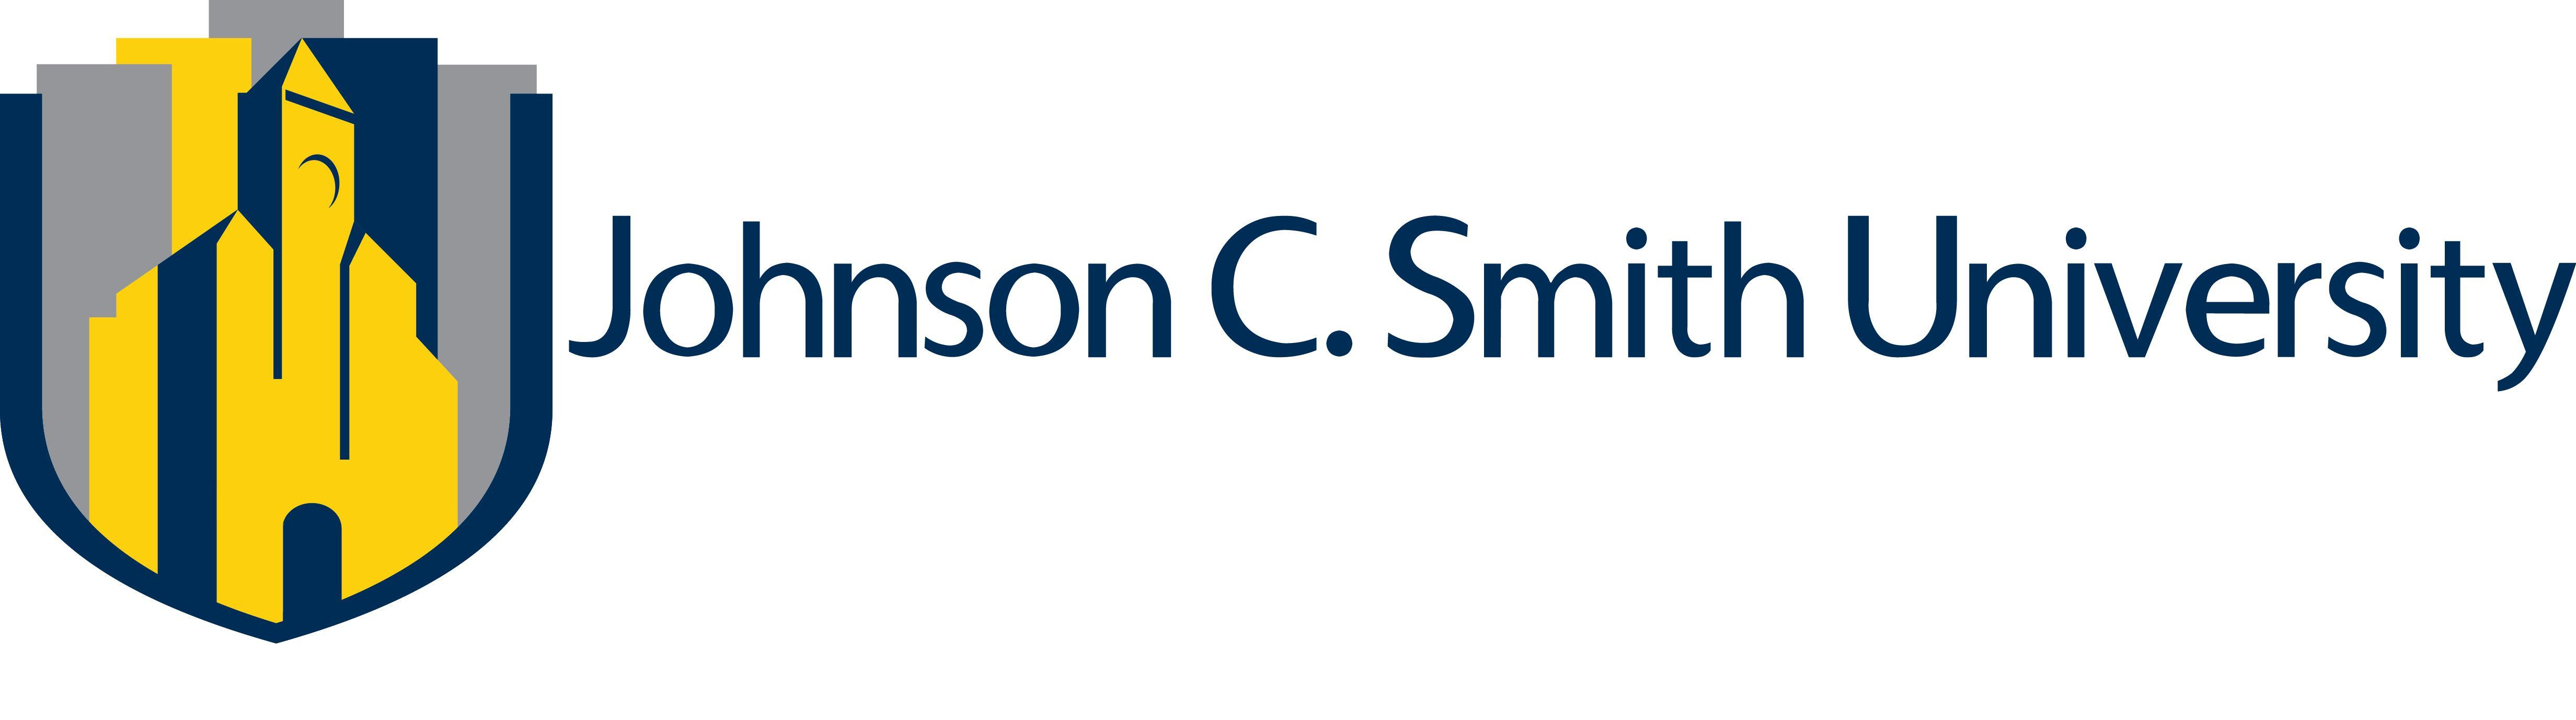 A Blue Green C Logo - Johnson C. Smith University - Identity Standards